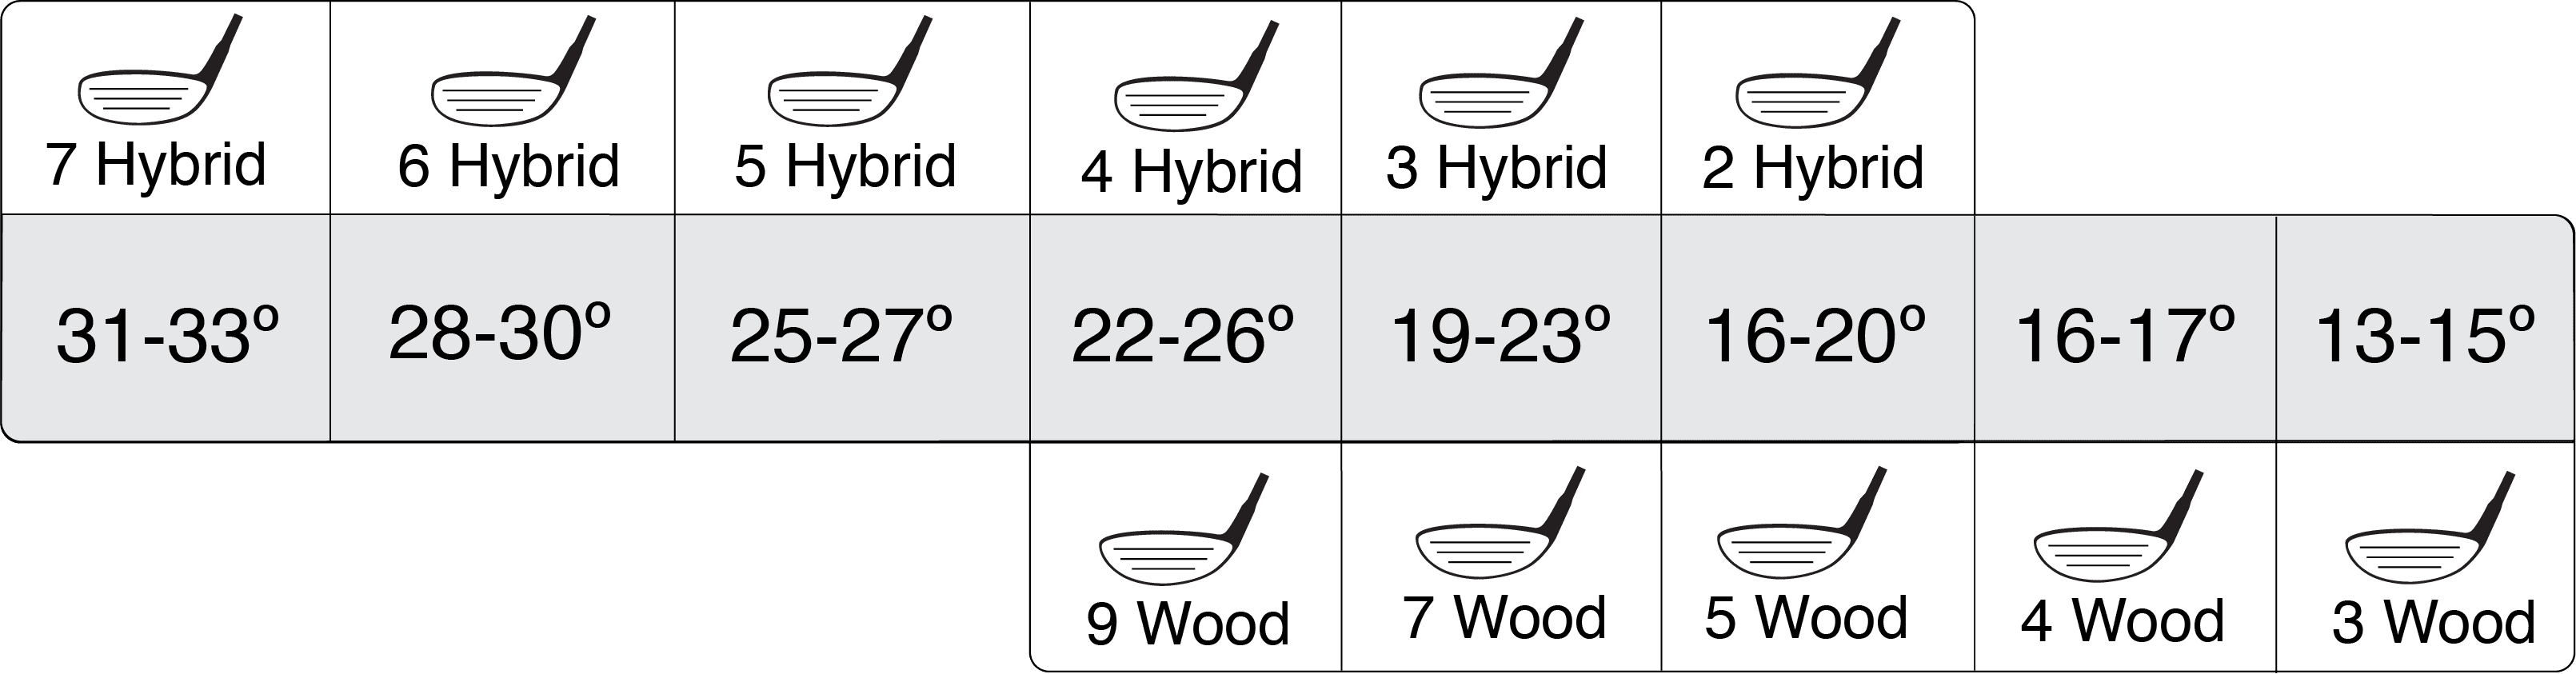 Golf Hybrid Degree Chart